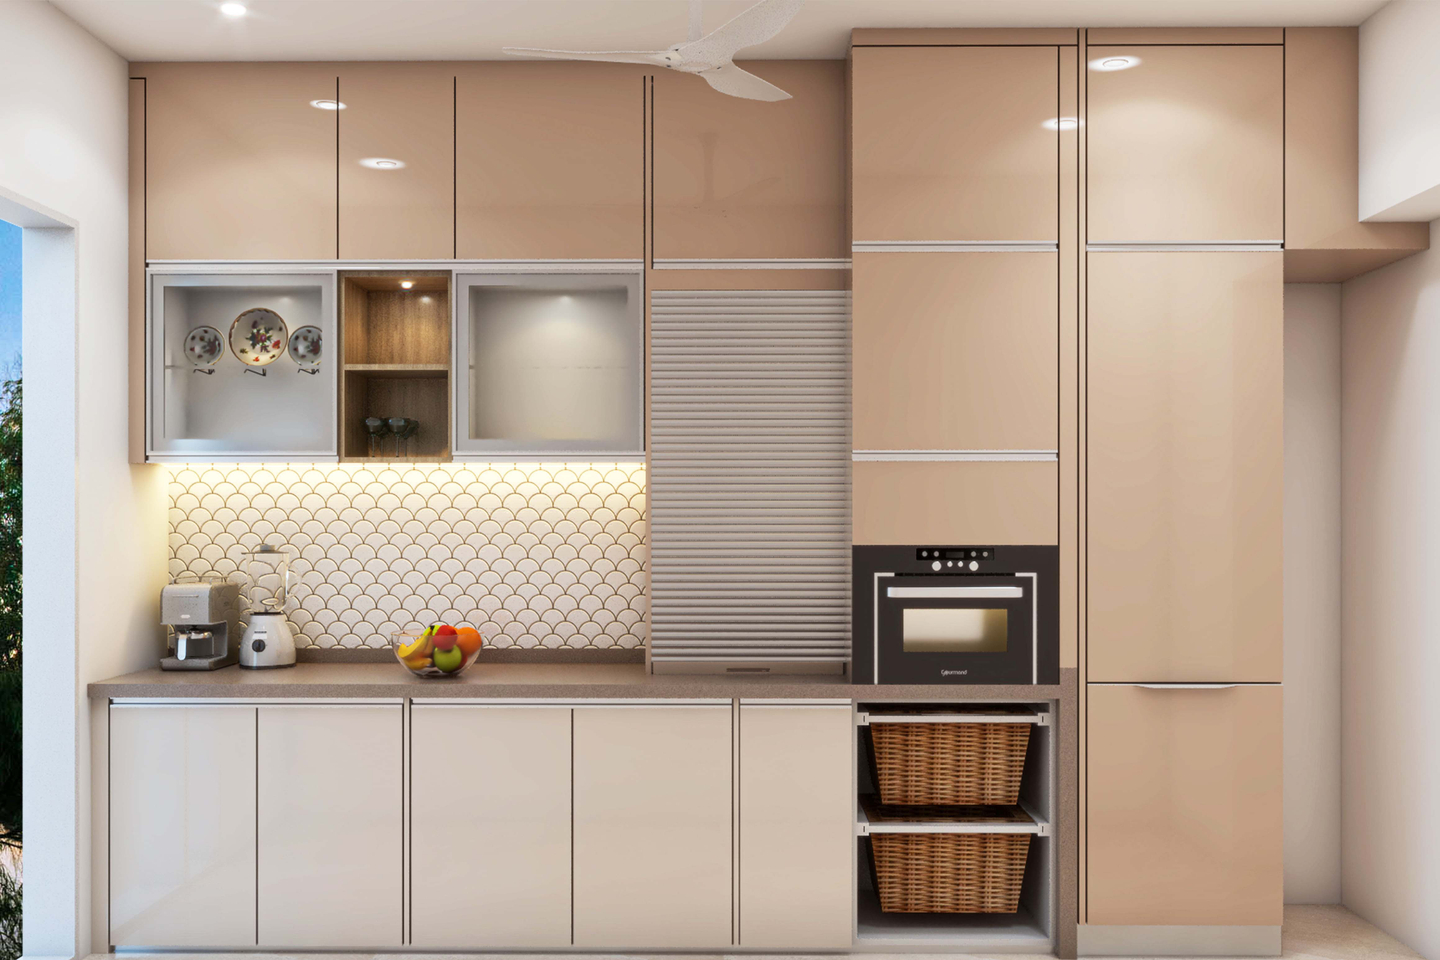 Modern Parallel Kitchen Design With A Quartz Countertop